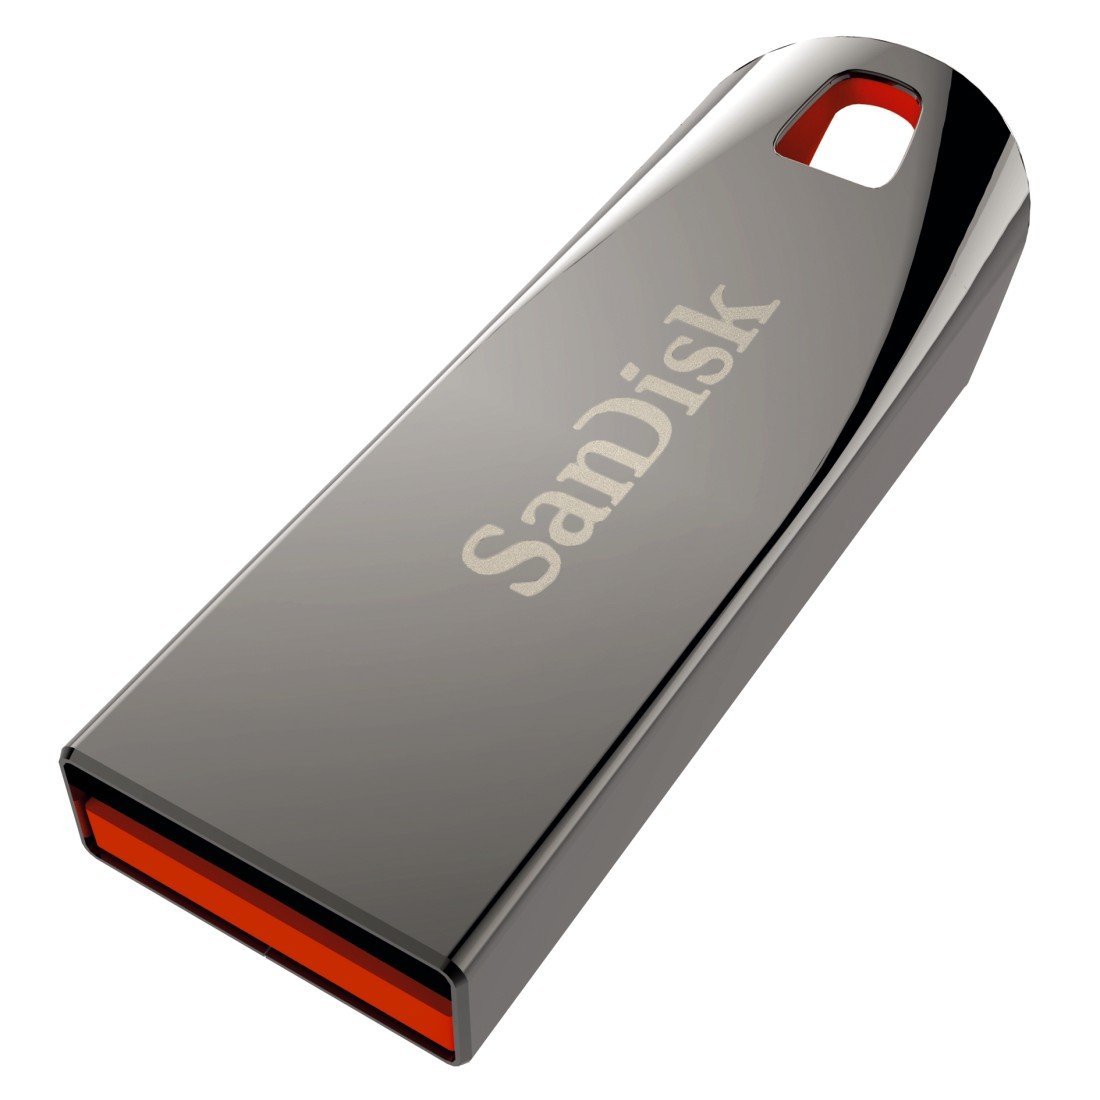 USB Sandisk CZ71 8Gb